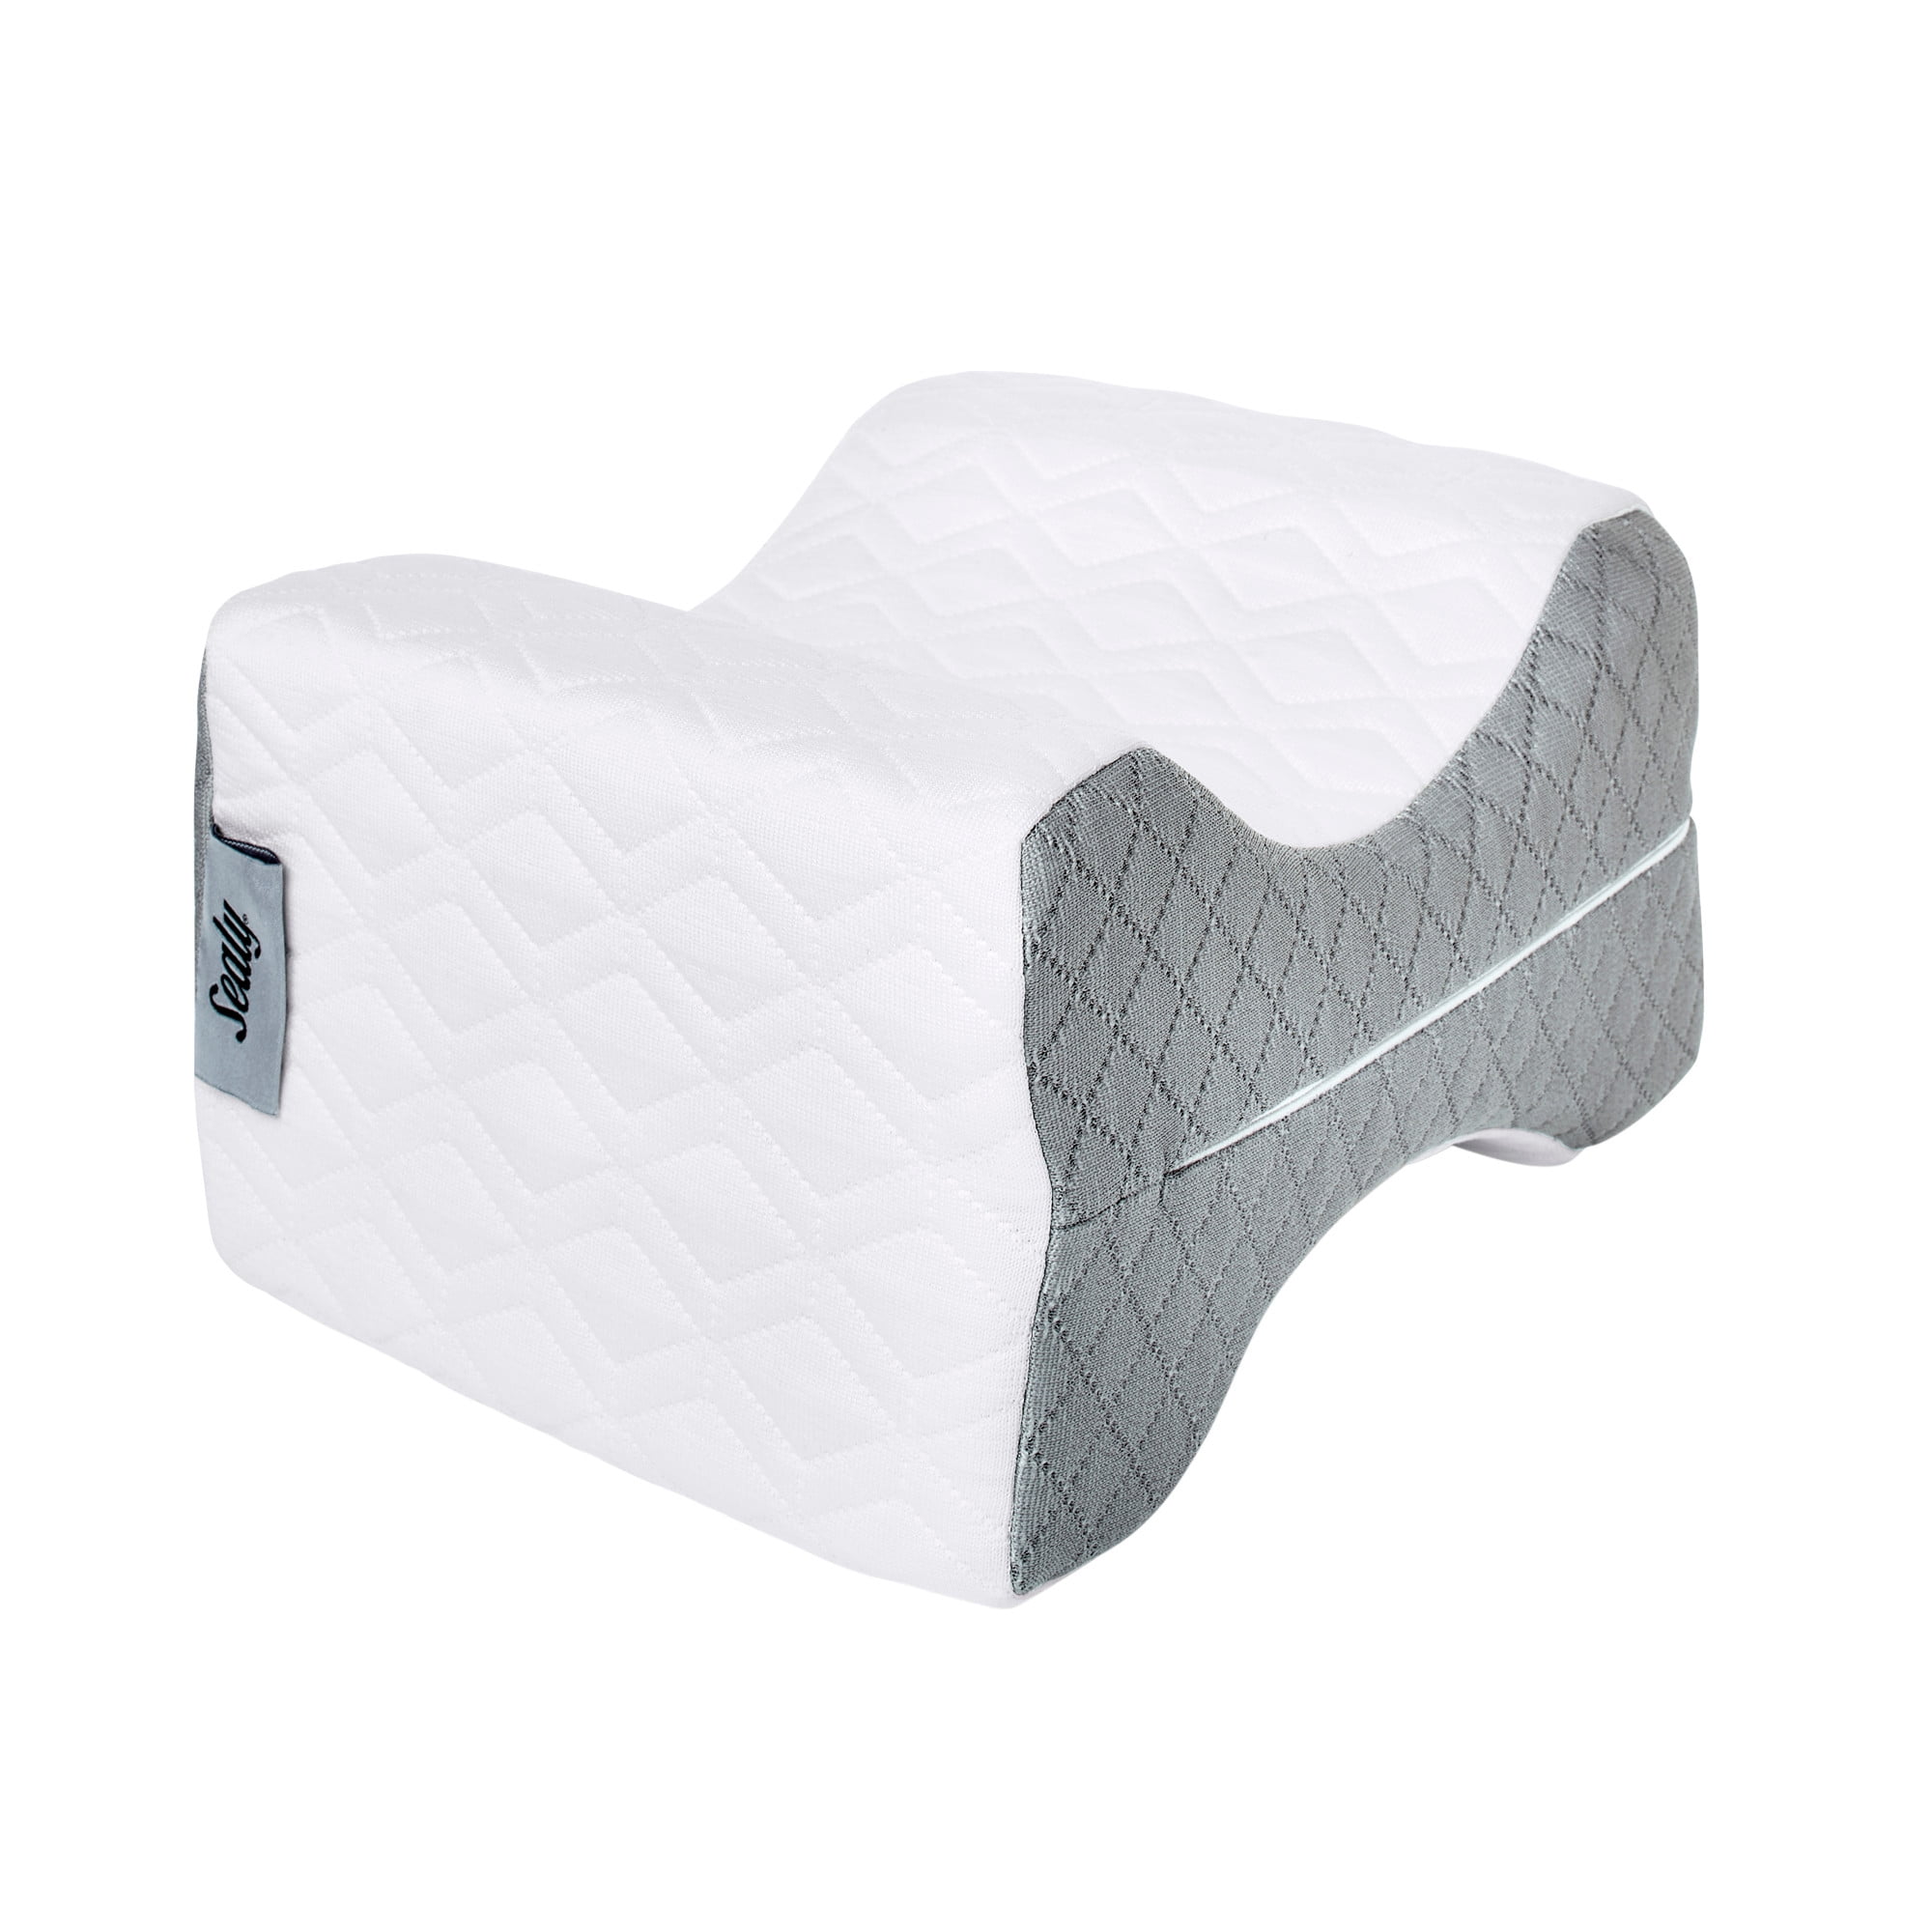 Sleepavo Memory Foam Pillow - 10x6x6 Side Sleeper Knee Pillow